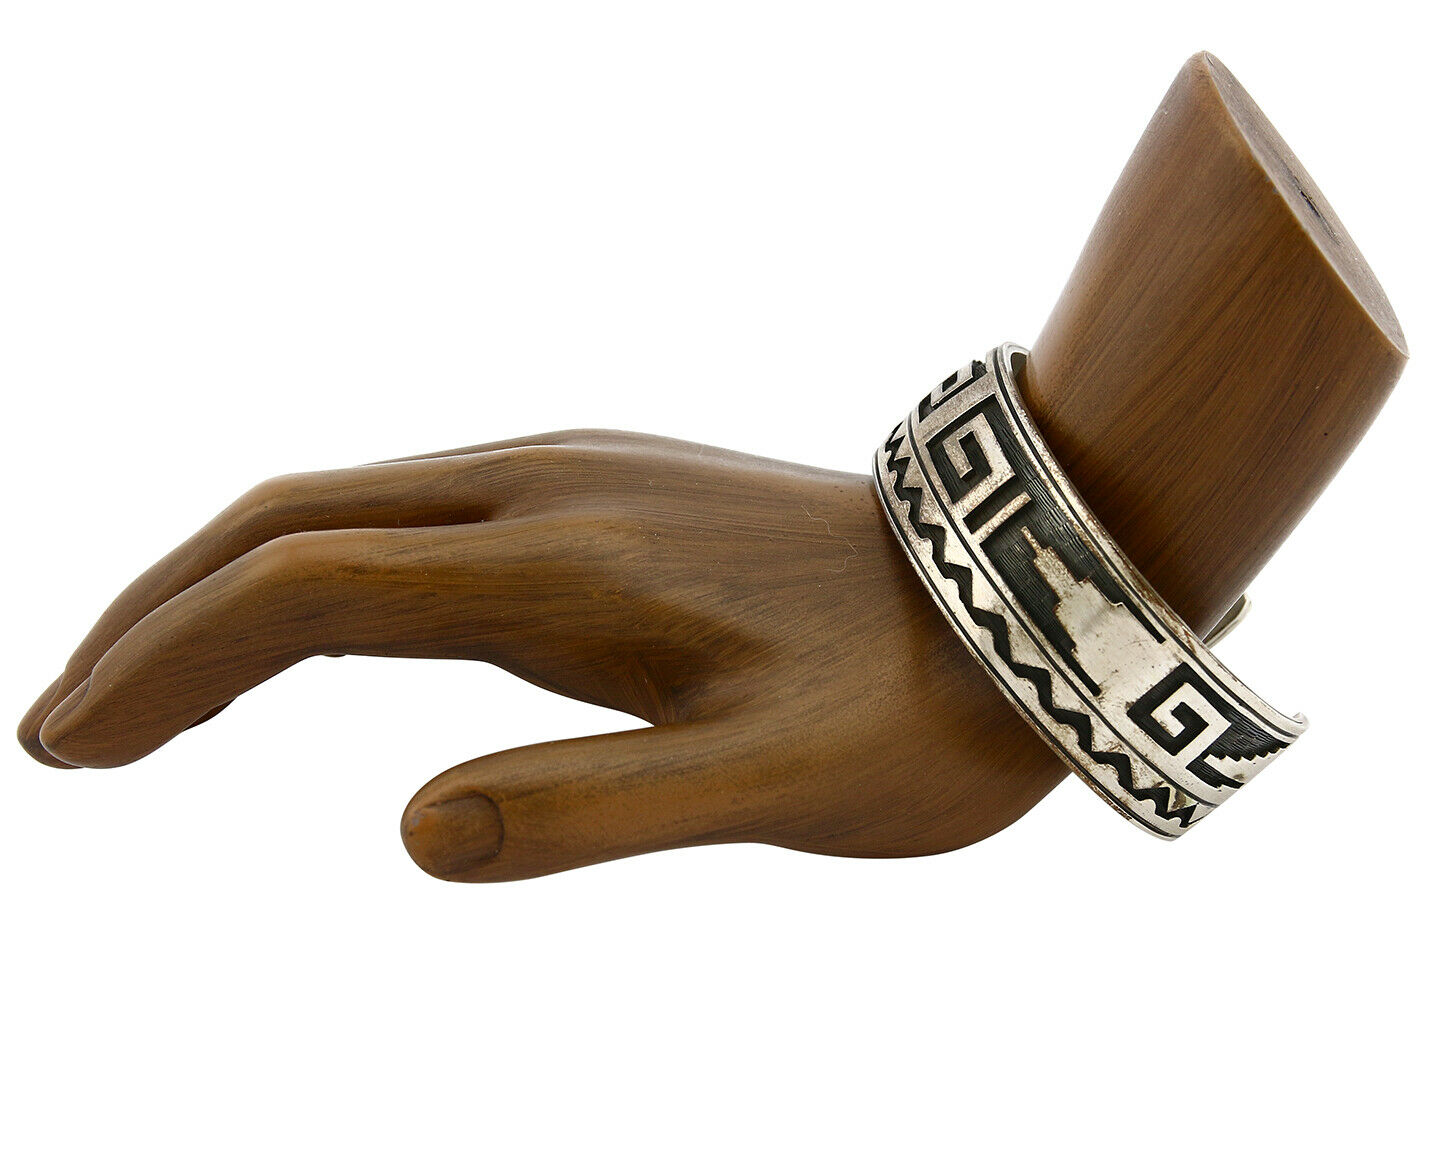 Hopi Bracelet .925 Silver Hand Stamped Overlay Signed RY C.80's